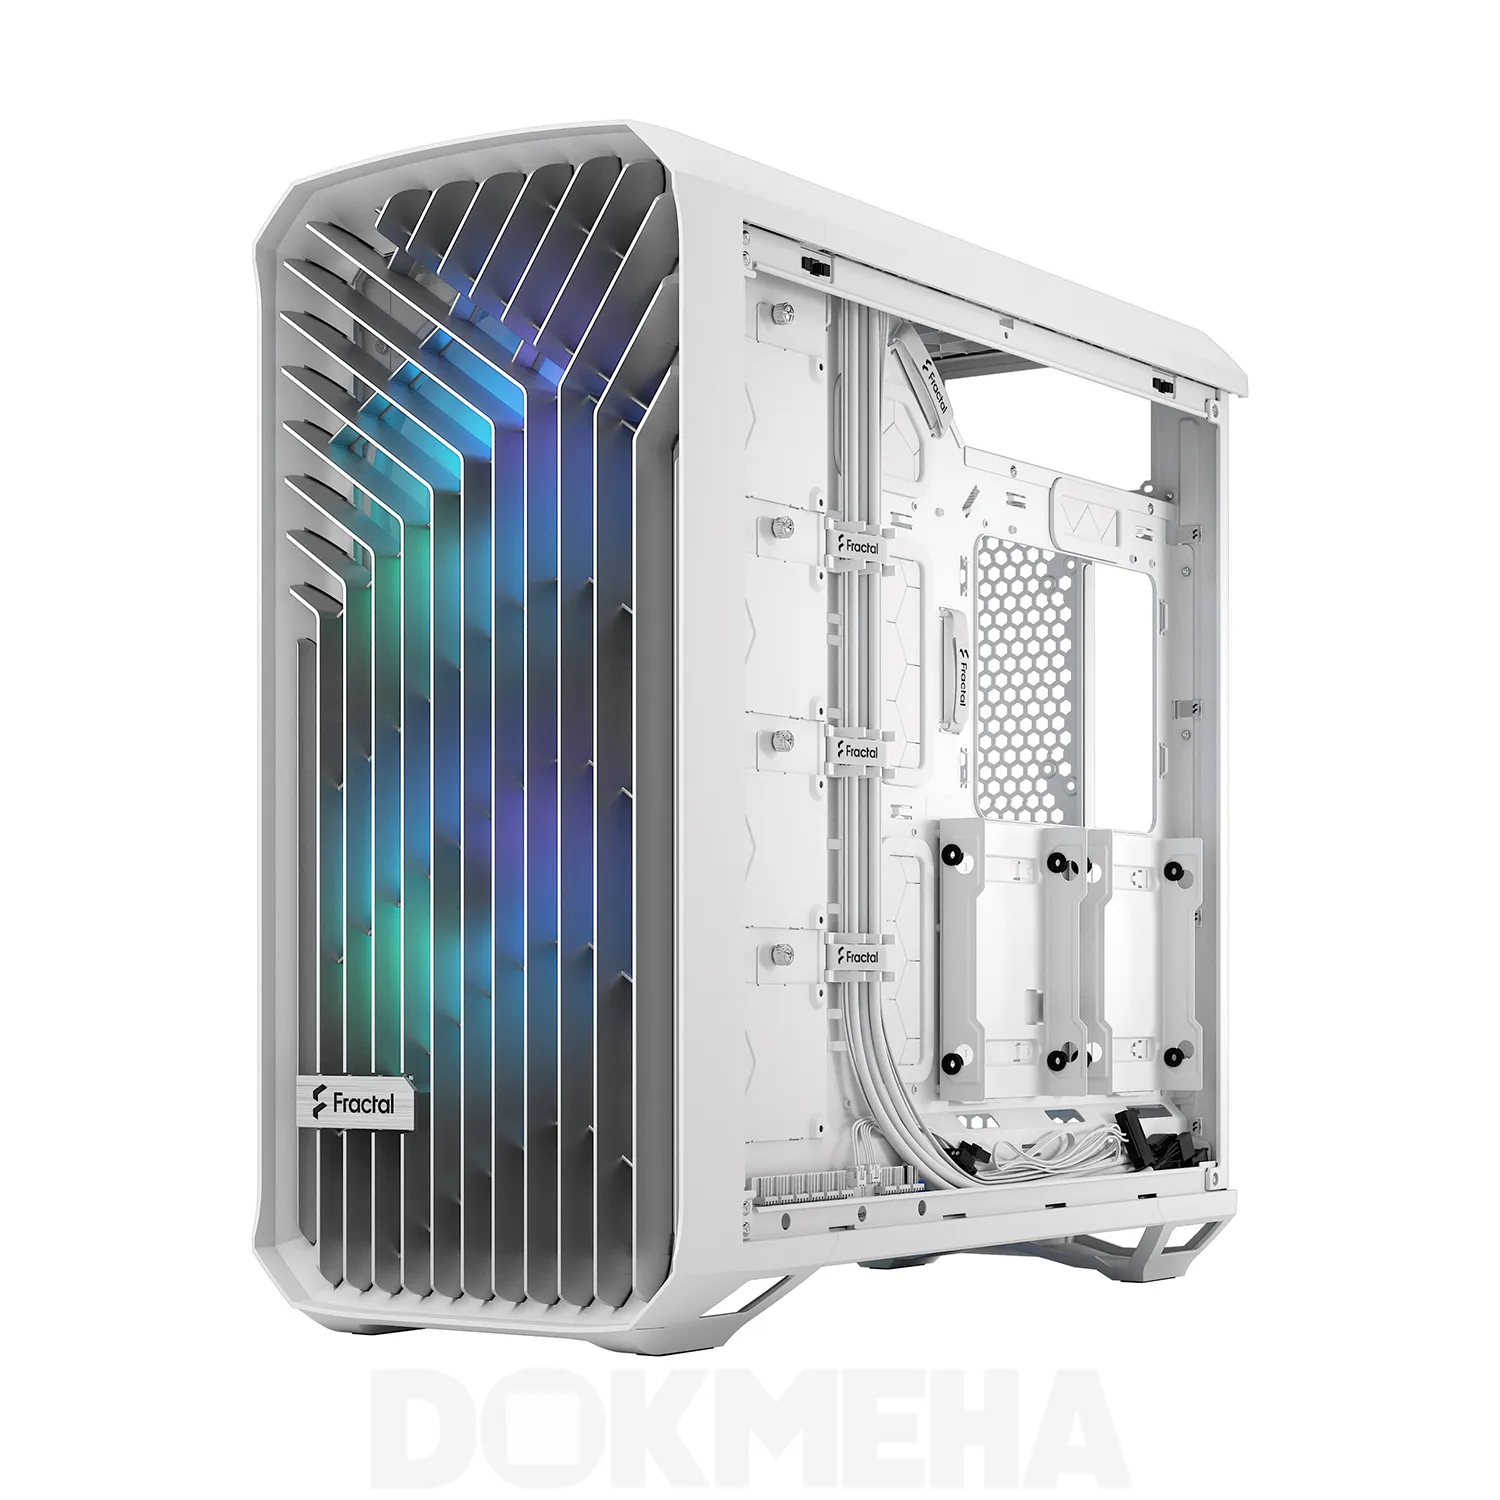 نمای پرسپکتیو چپ کابل کشی - رنگ سفید - کیس ورک استیشن DOKMEHA W20000 Intel Xeon - 3TH GEN